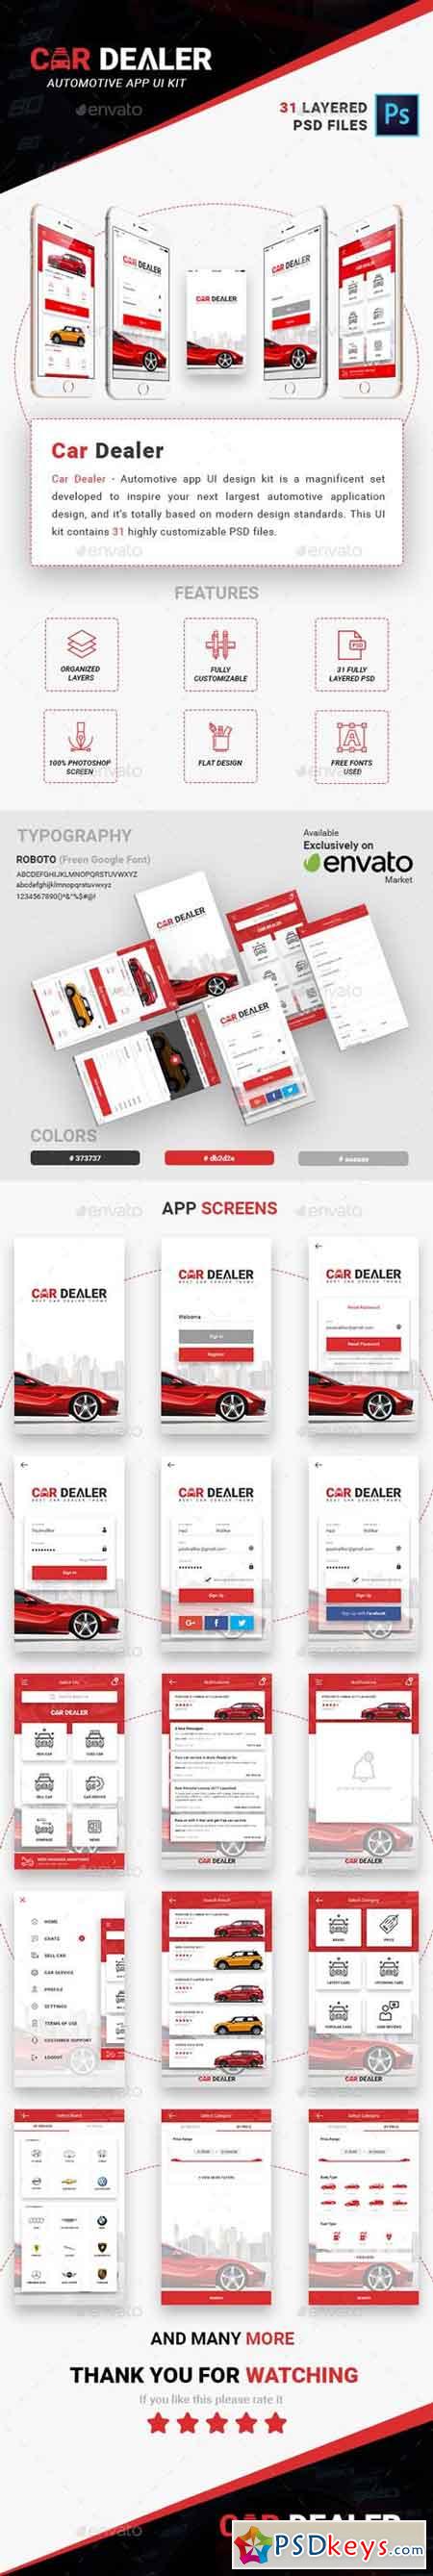 Car Dealer - Automotive App UI Kit 20498744